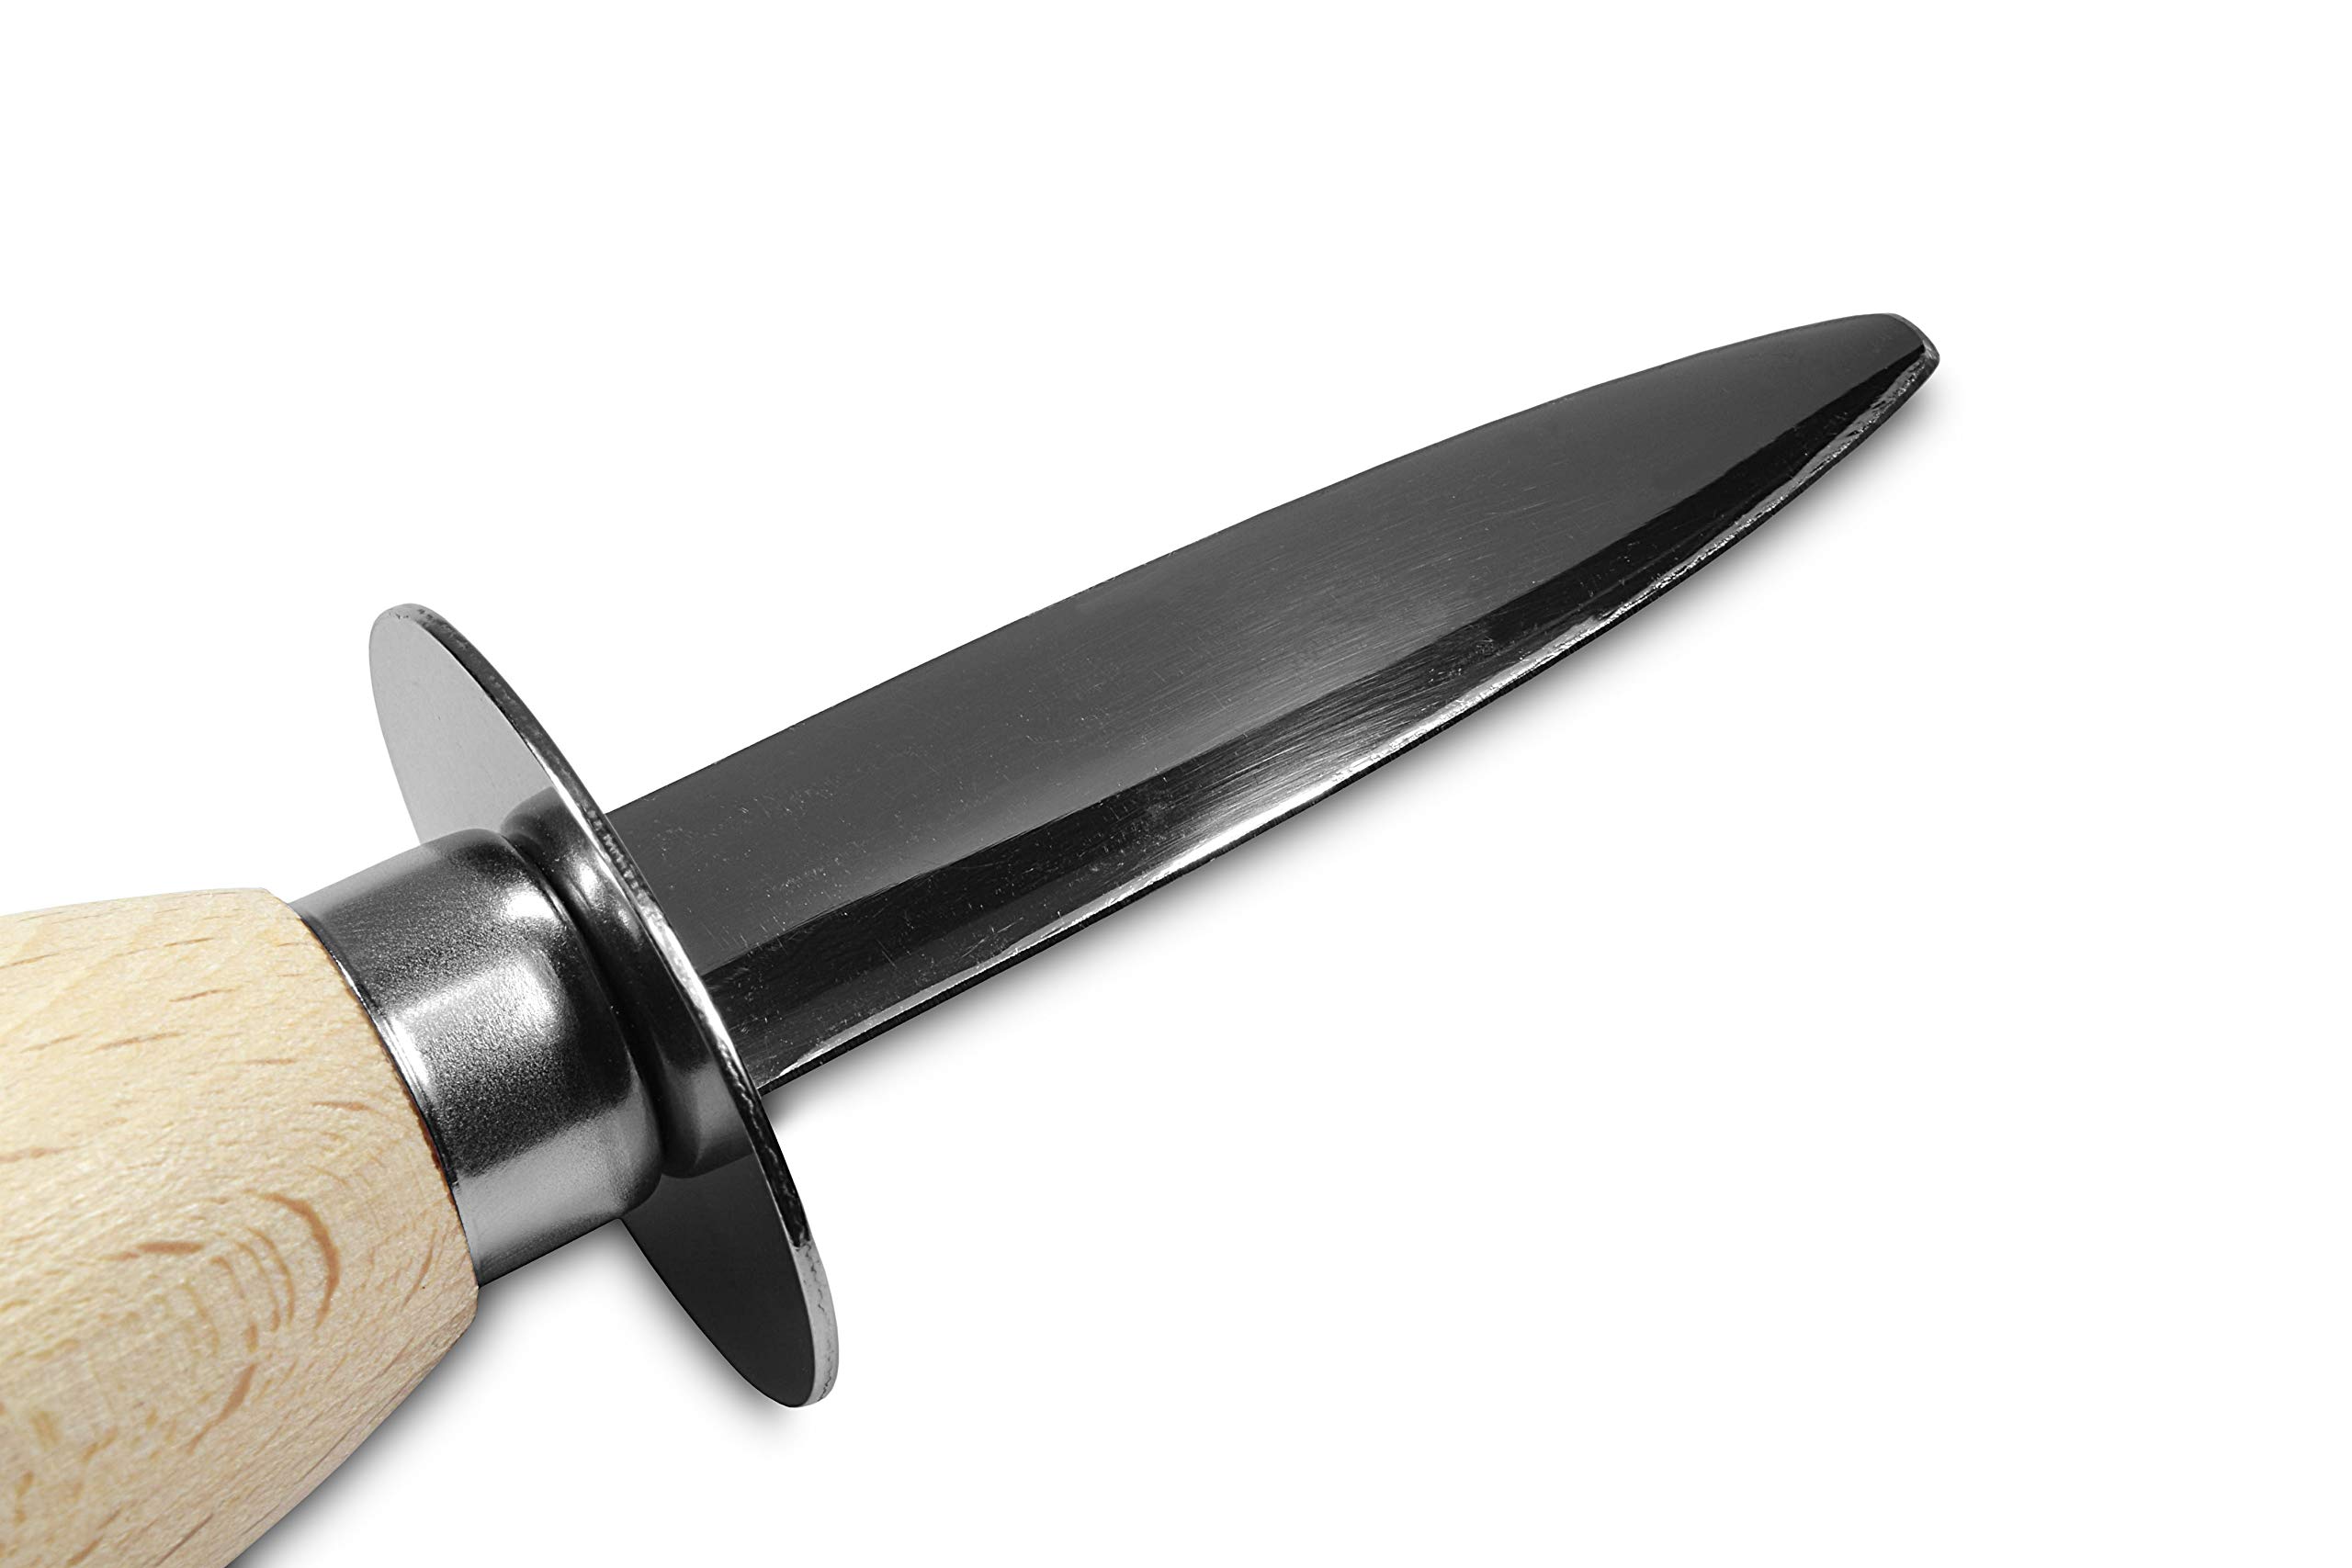 Seki Japan Oyster Knife, Japanese Hand Guard Shellfish Opener, Oyster Shucking 2.6 inch (67 mm) Stainless Blade, Beech Wood Handle